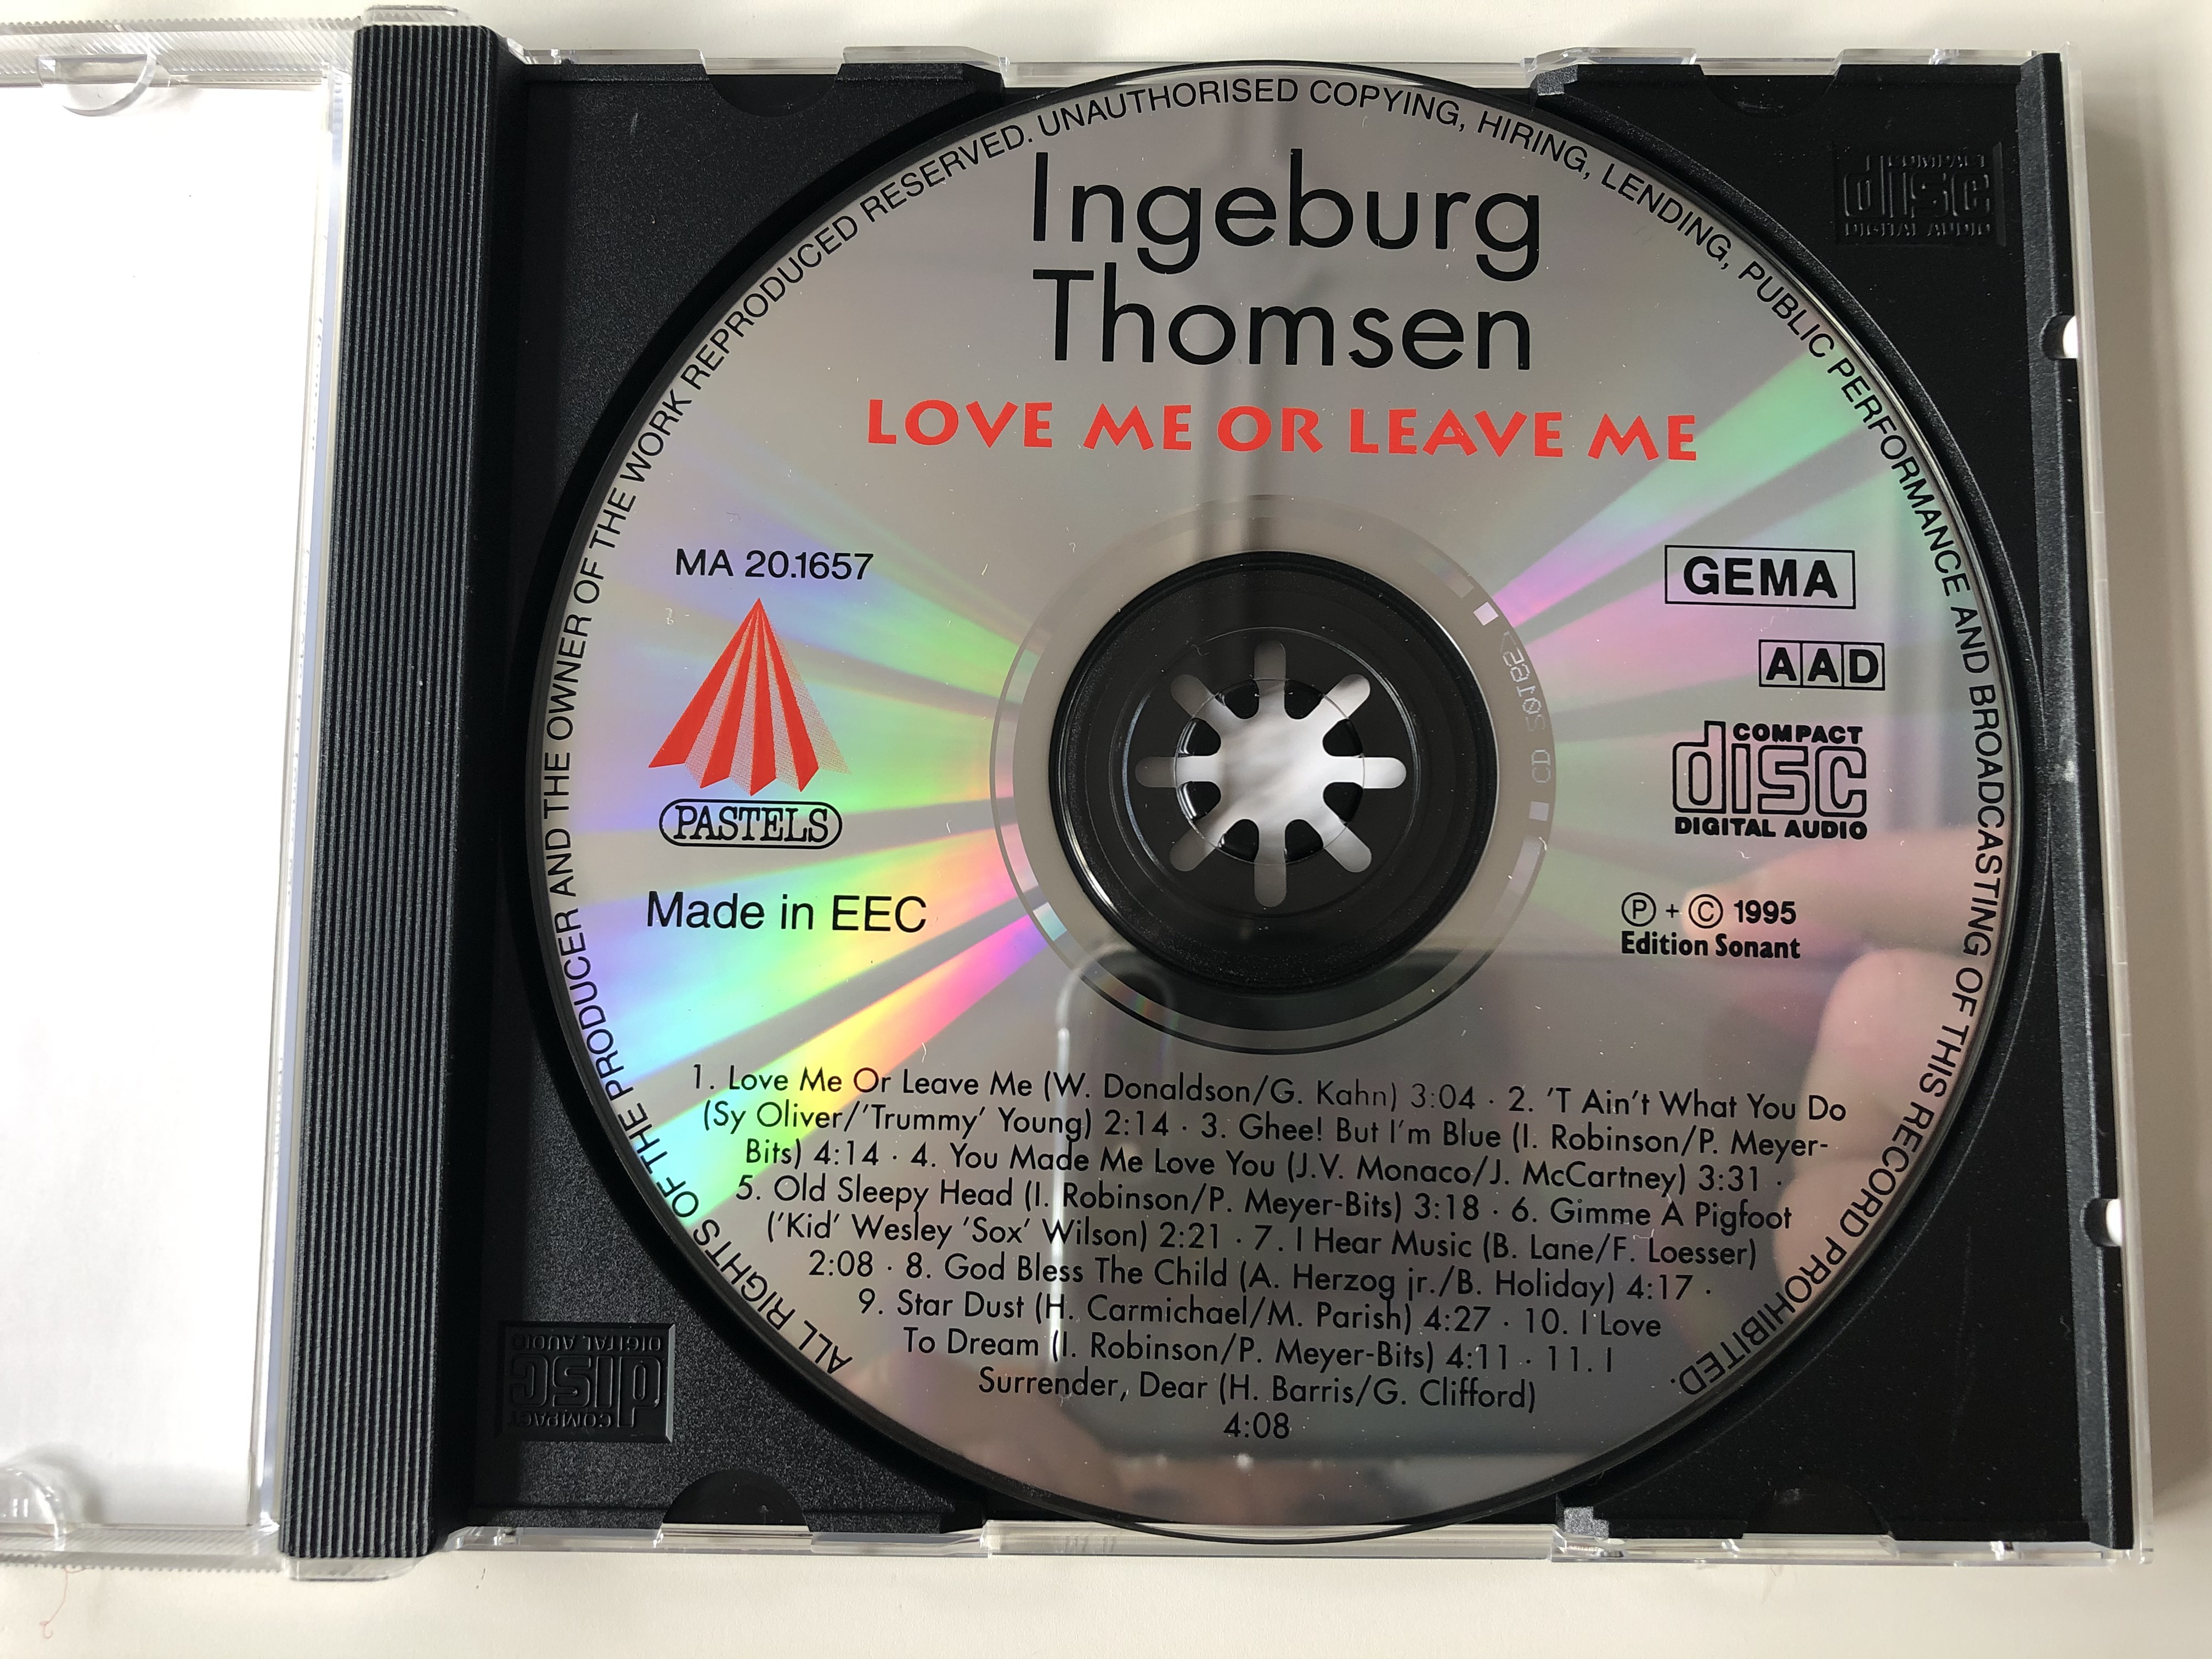 ingeburg-thomsen-love-me-or-leave-me-star-dust-i-love-to-dream-i-surrender-dear-god-bless-the-child-u.a.-digital-remastered-jazz-edition-pastels-audio-cd-1995-cd-20-2-.jpg